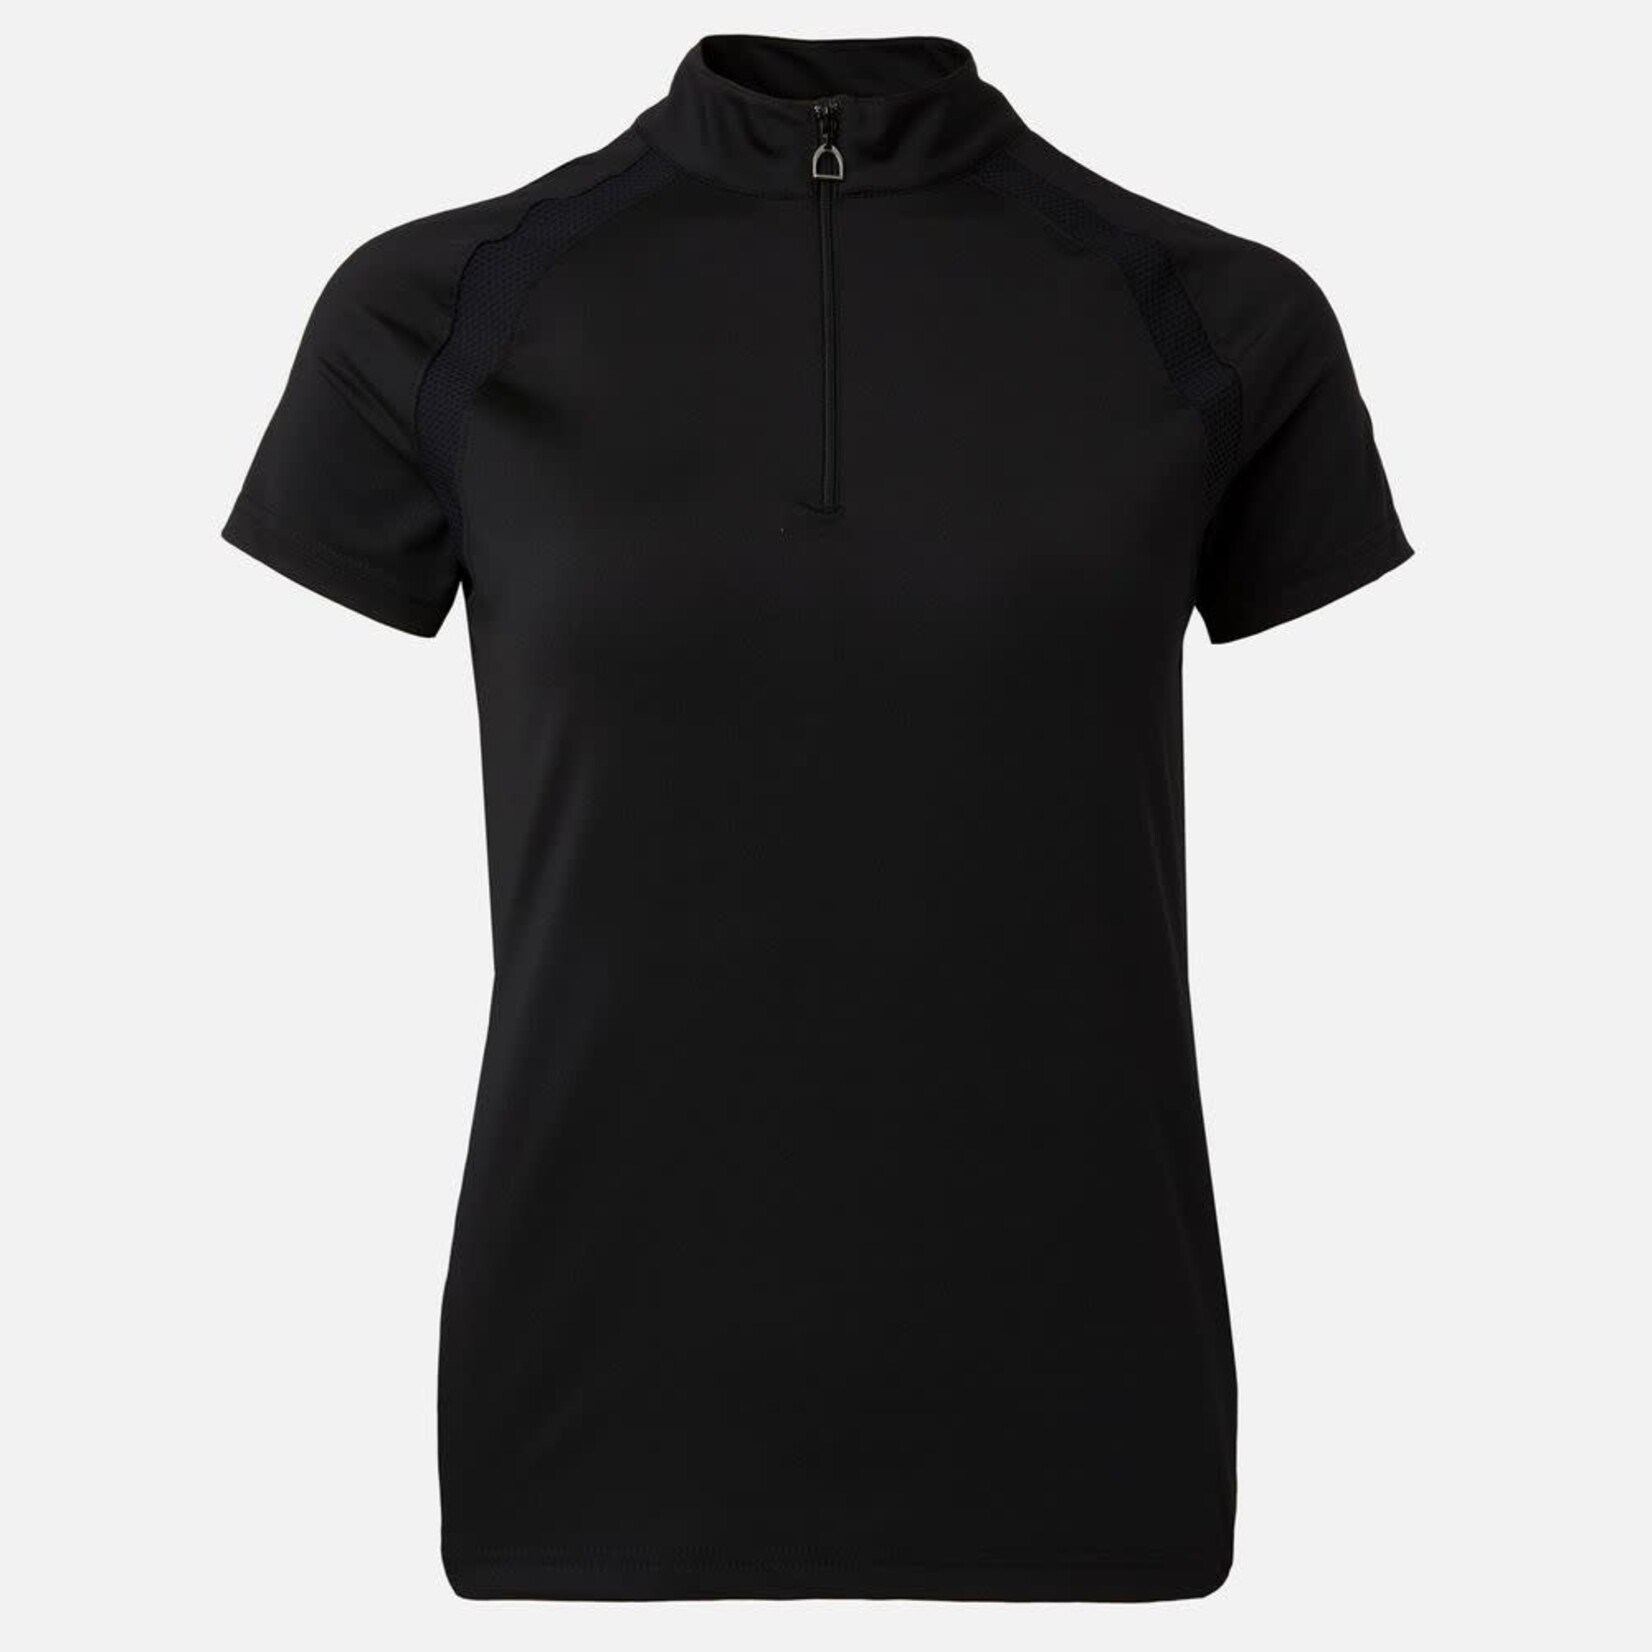 Horze Mia Women's Short Sleeve Training Polo Shirt